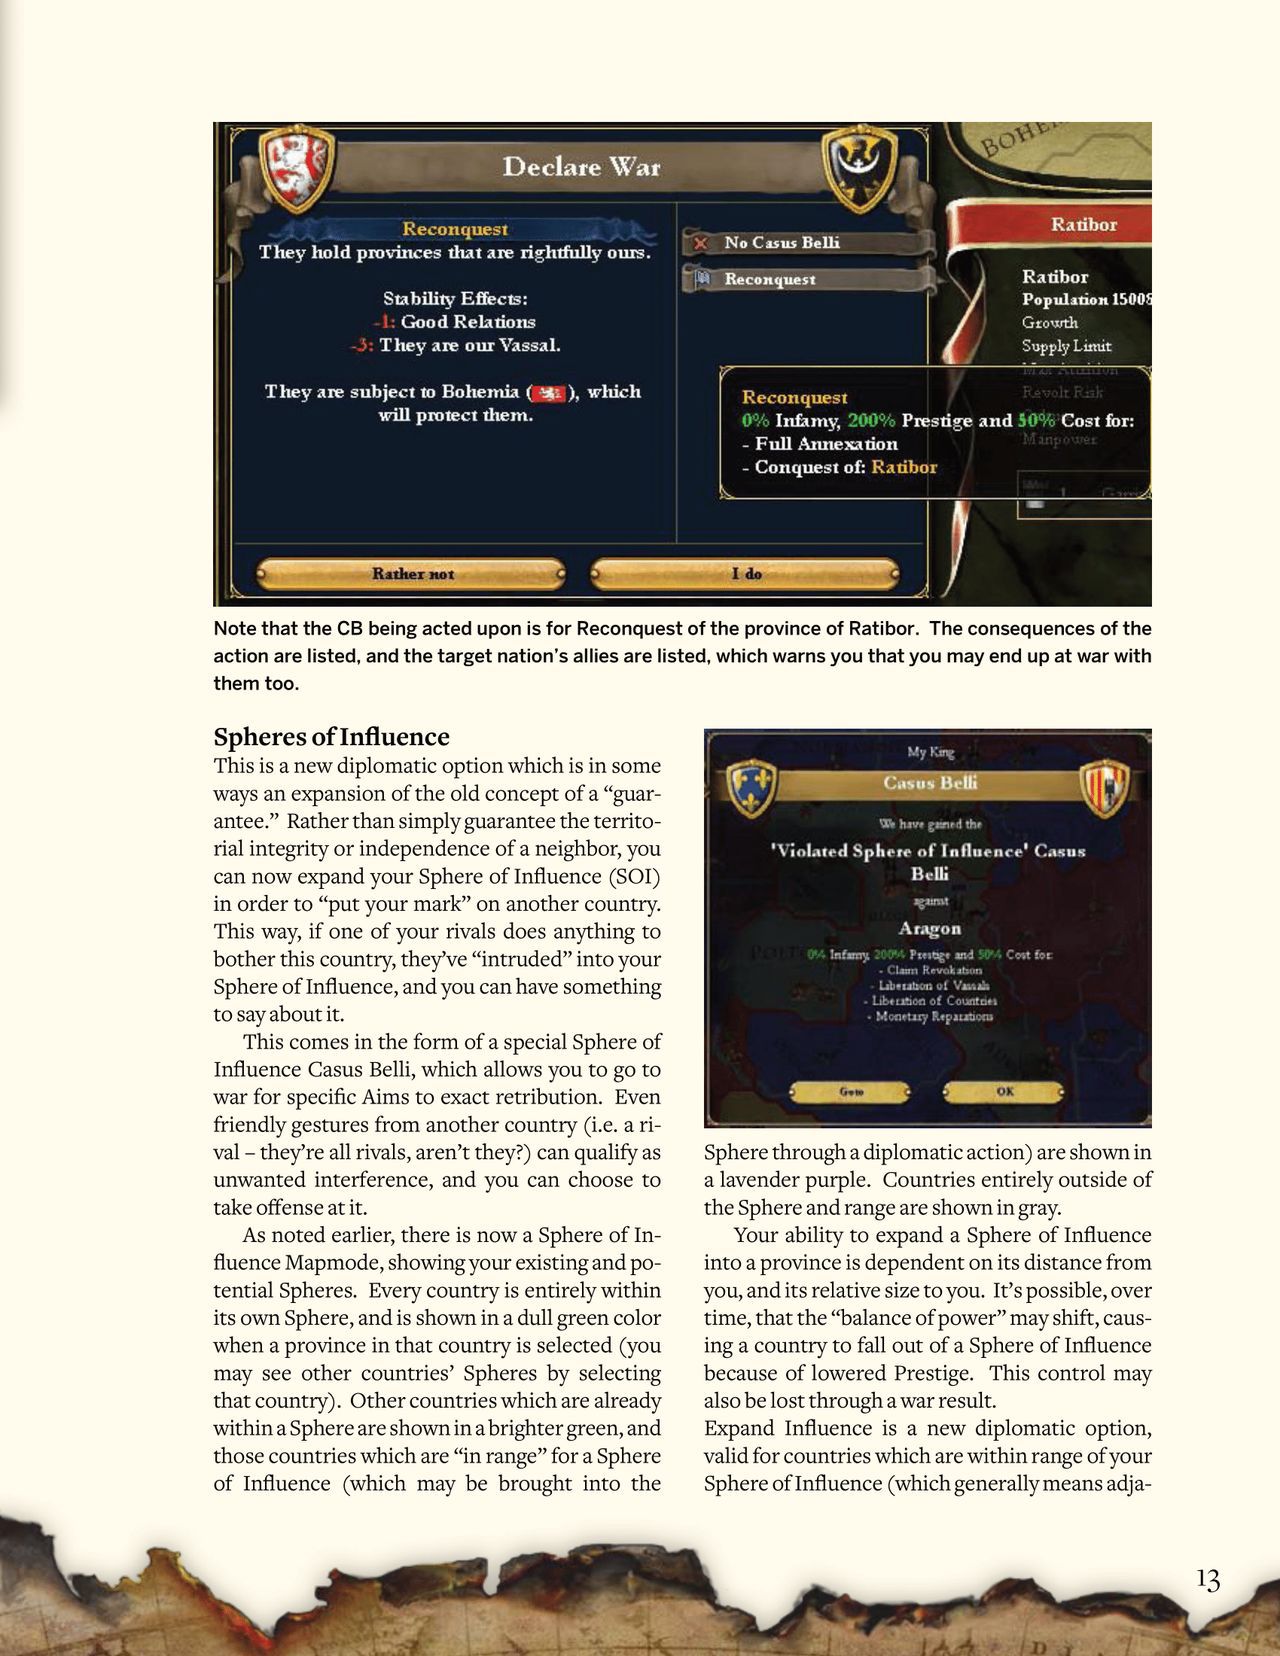 Europa Universalis III: Heir to the Throne (PC (DOS/Windows)) Game Manual 13